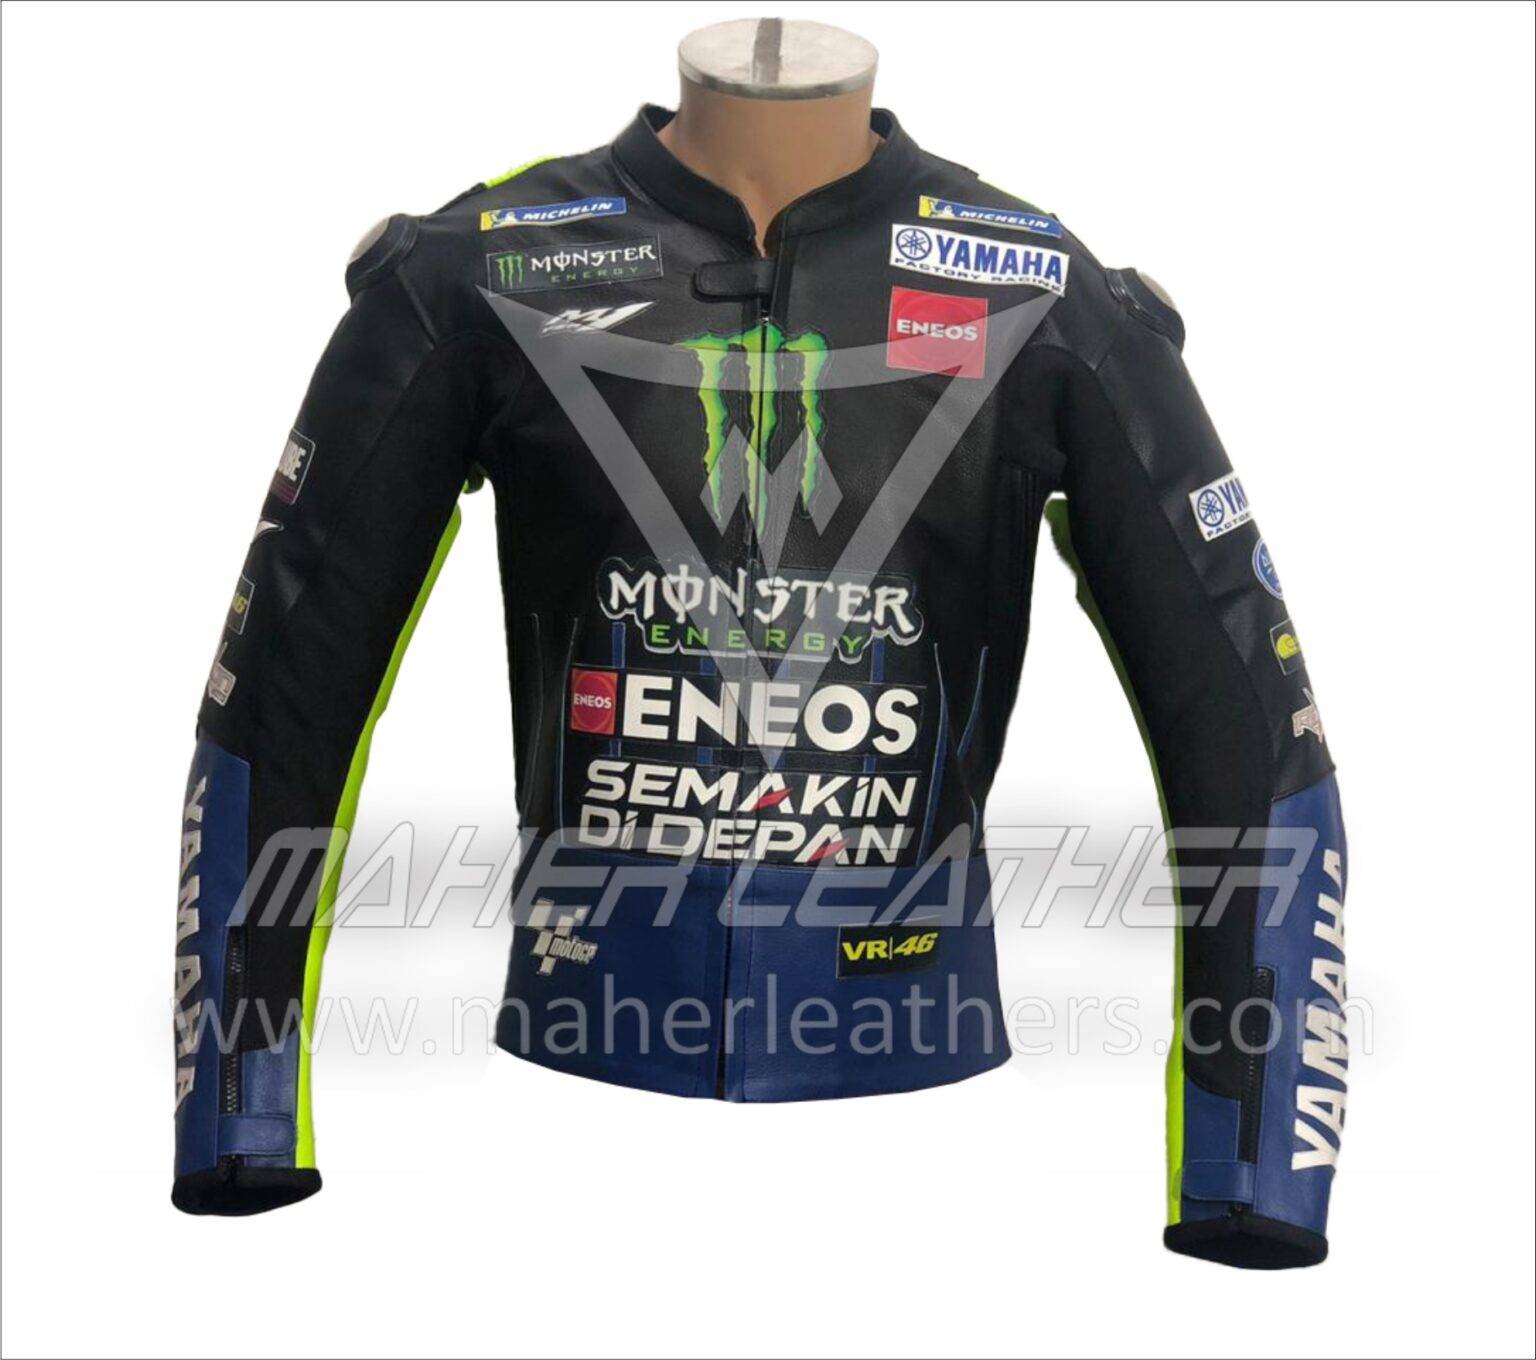 Monster energy yamaha leather motorcycle jacket | motogp apparel